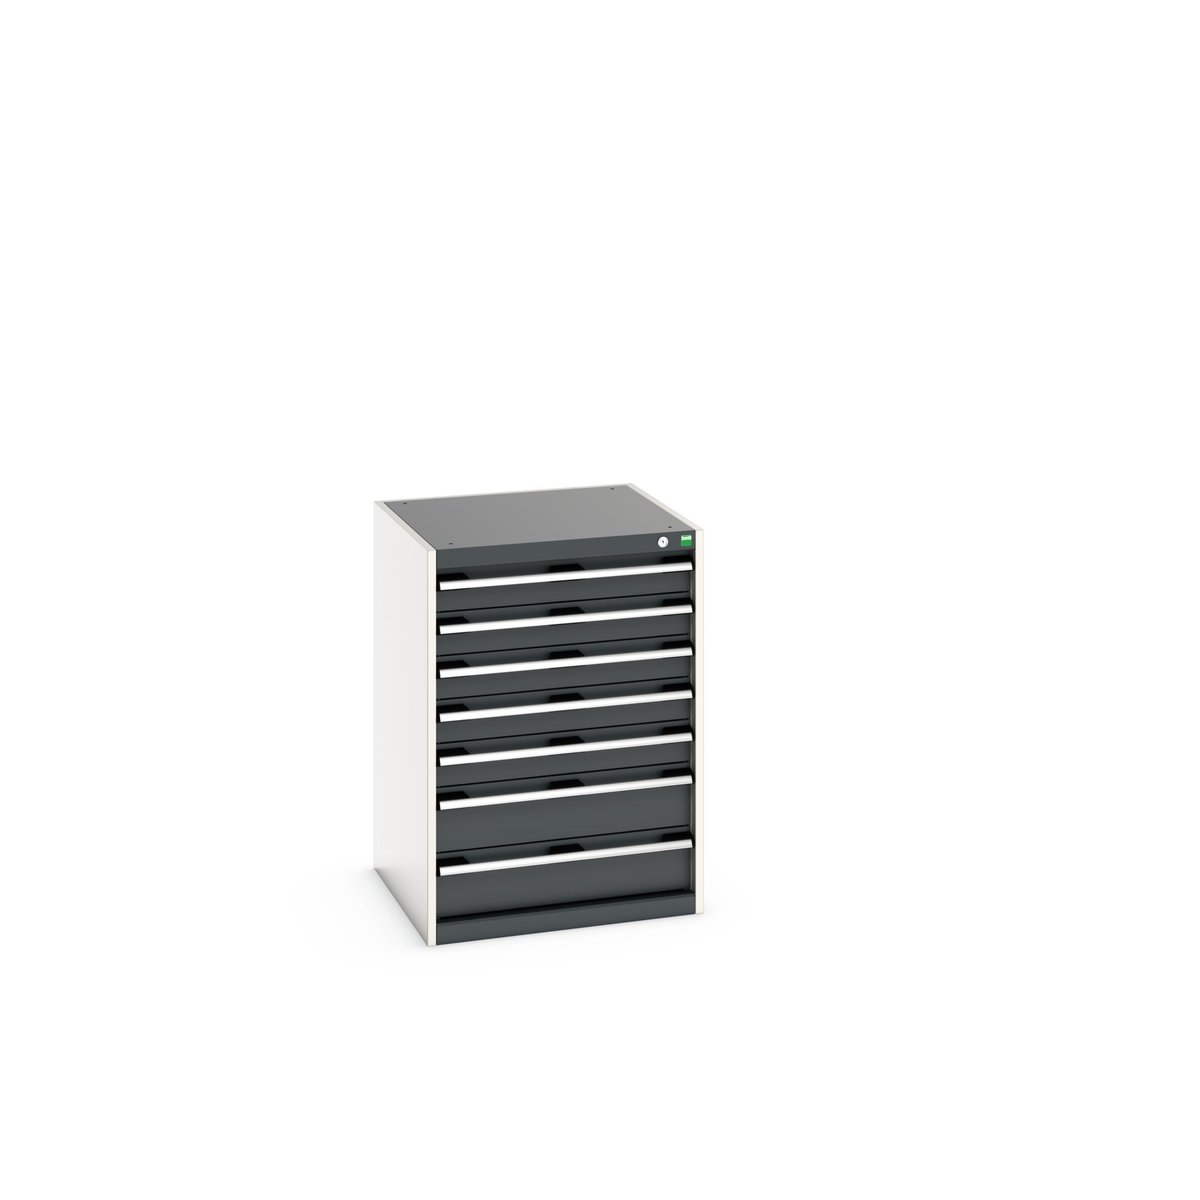 40019051. - cubio drawer cabinet